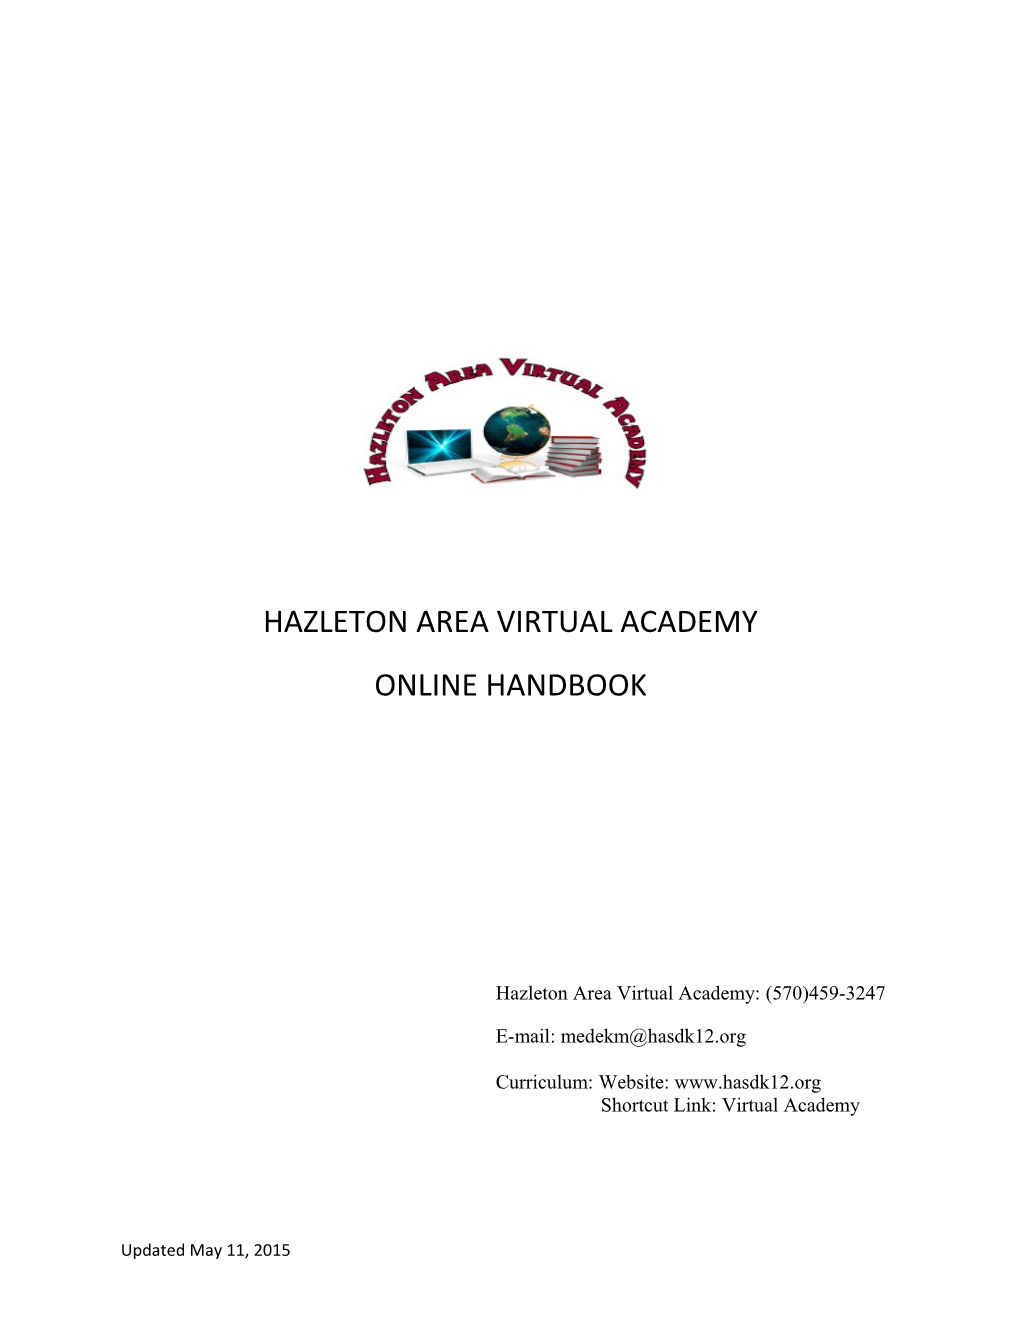 Hazleton Area Virtual Academy